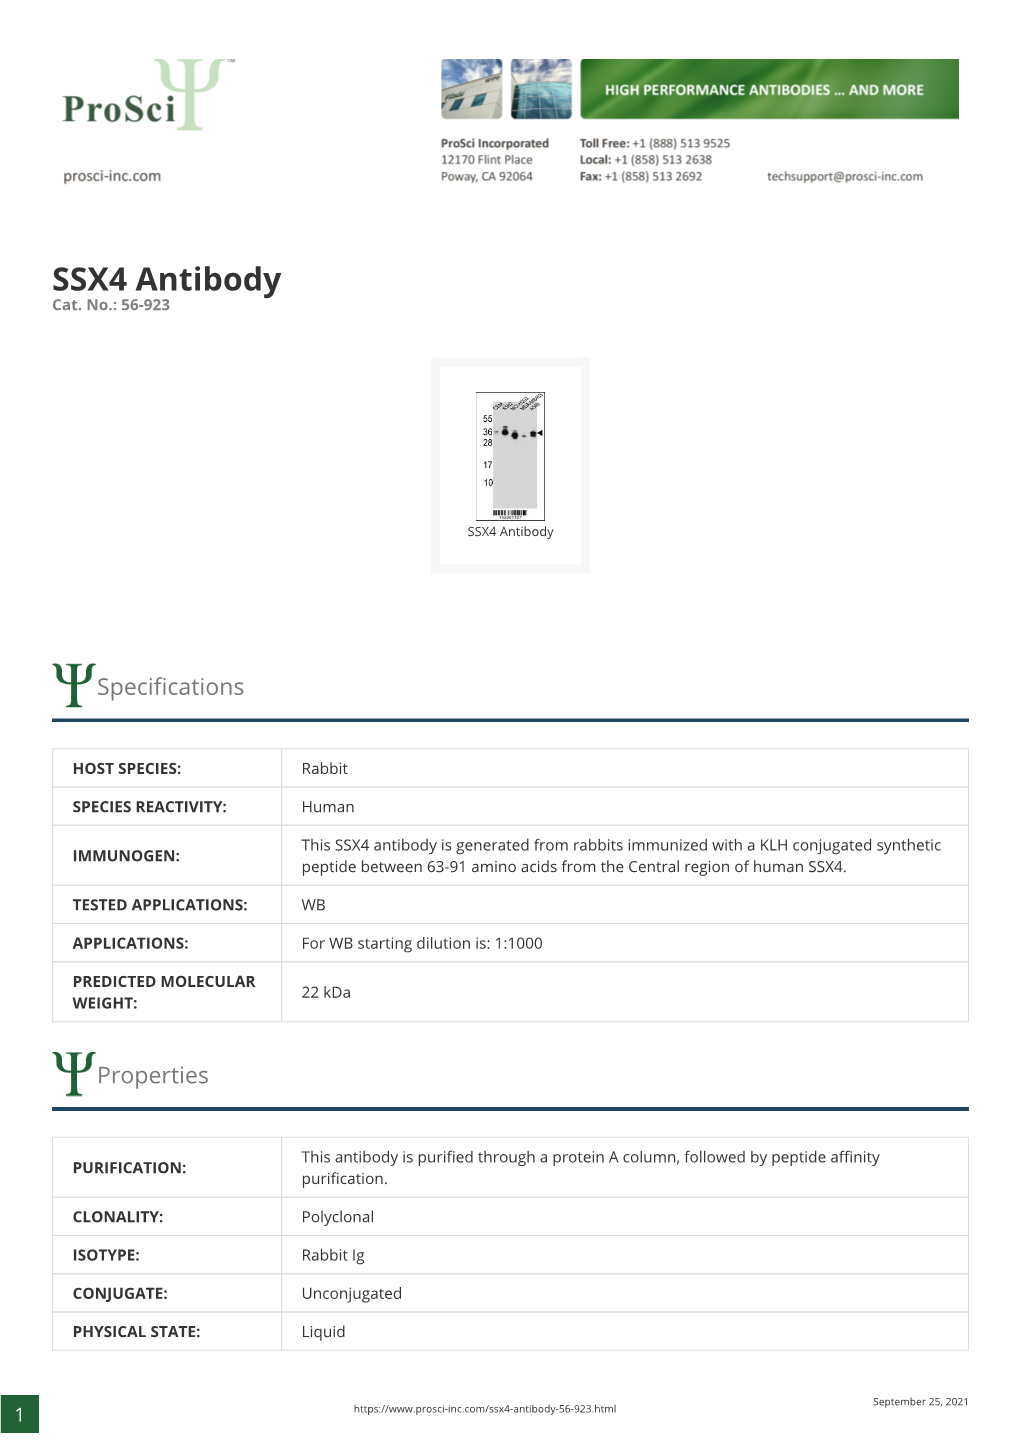 SSX4 Antibody Cat